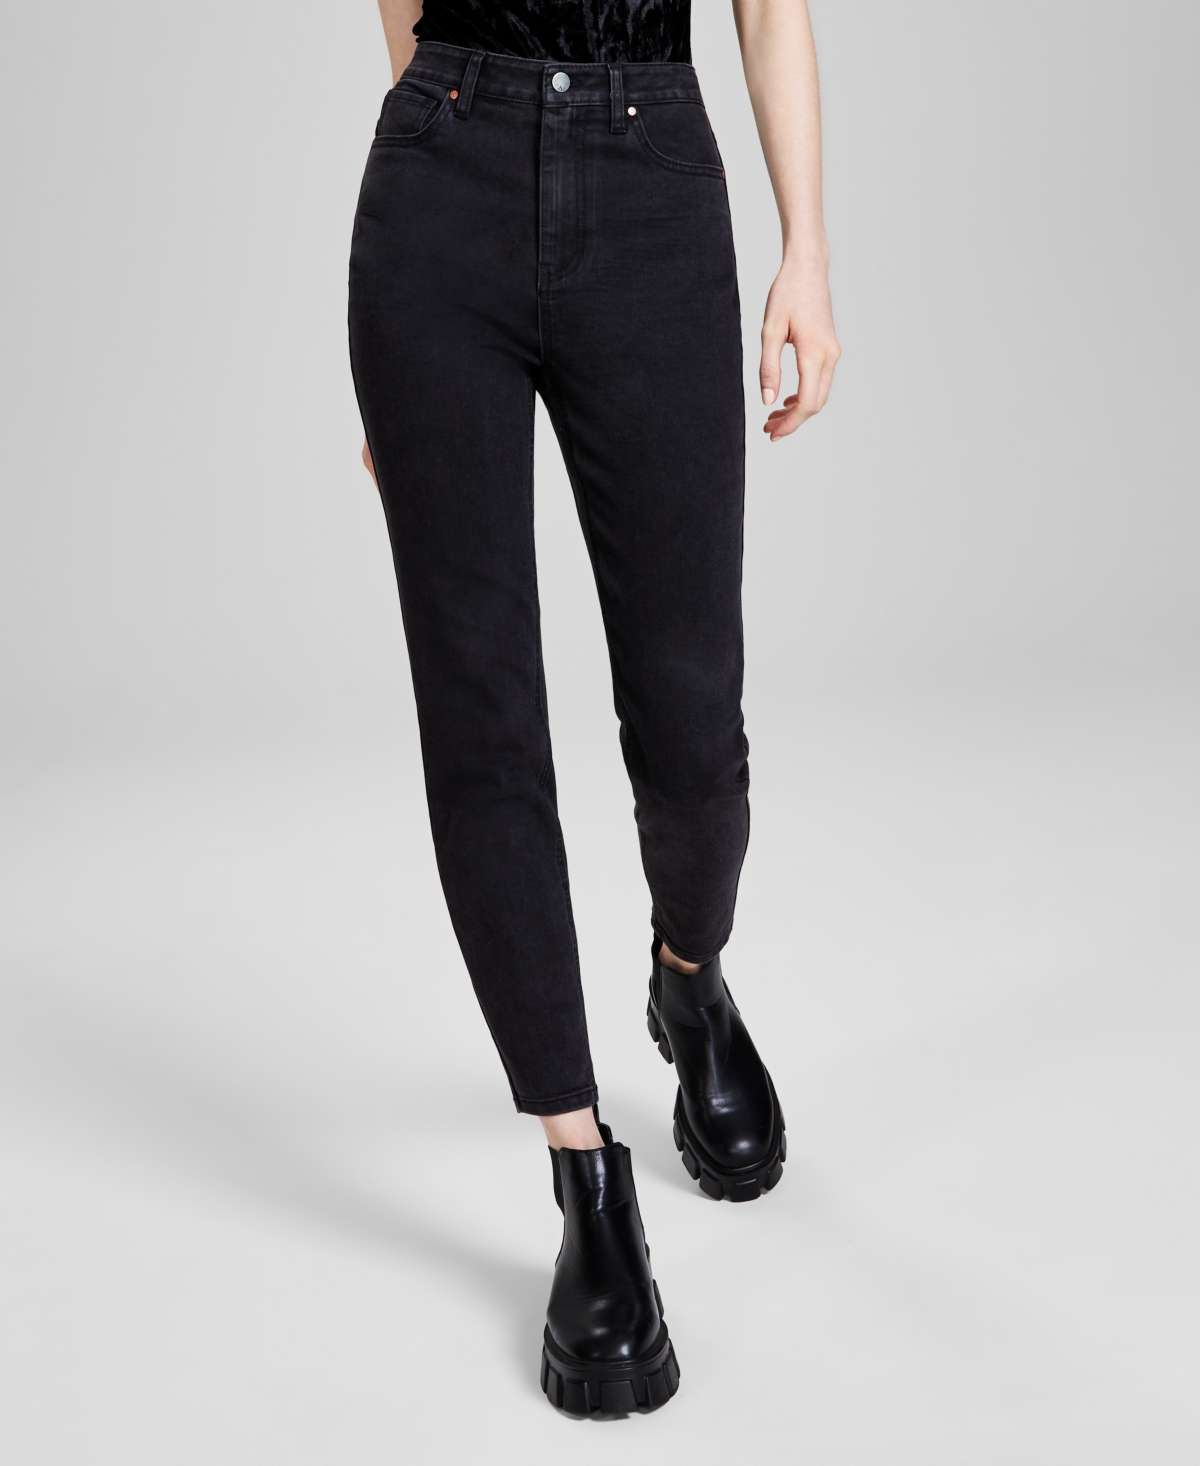 Women's High Rise Skinny Jeans, Created for Macy's - Eddison